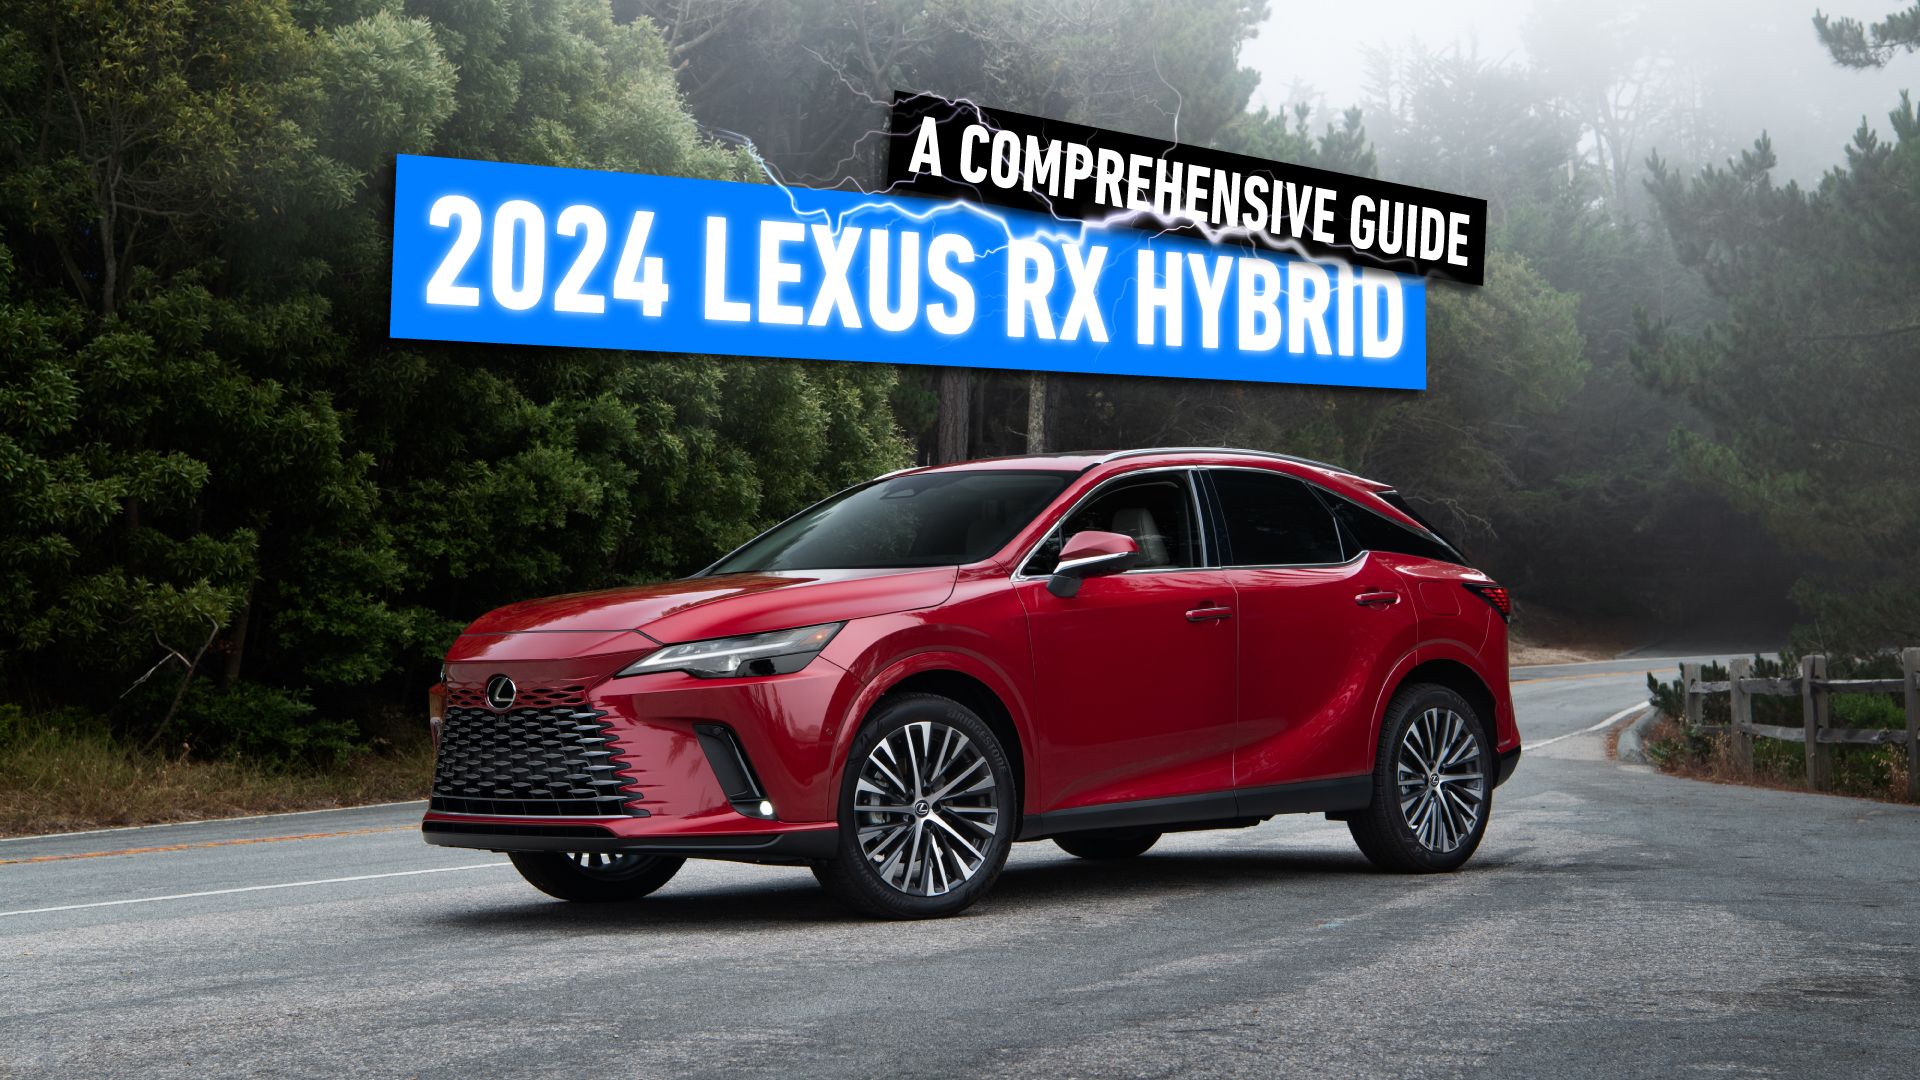 Red 2024 Lexus RX Hybrid custom image